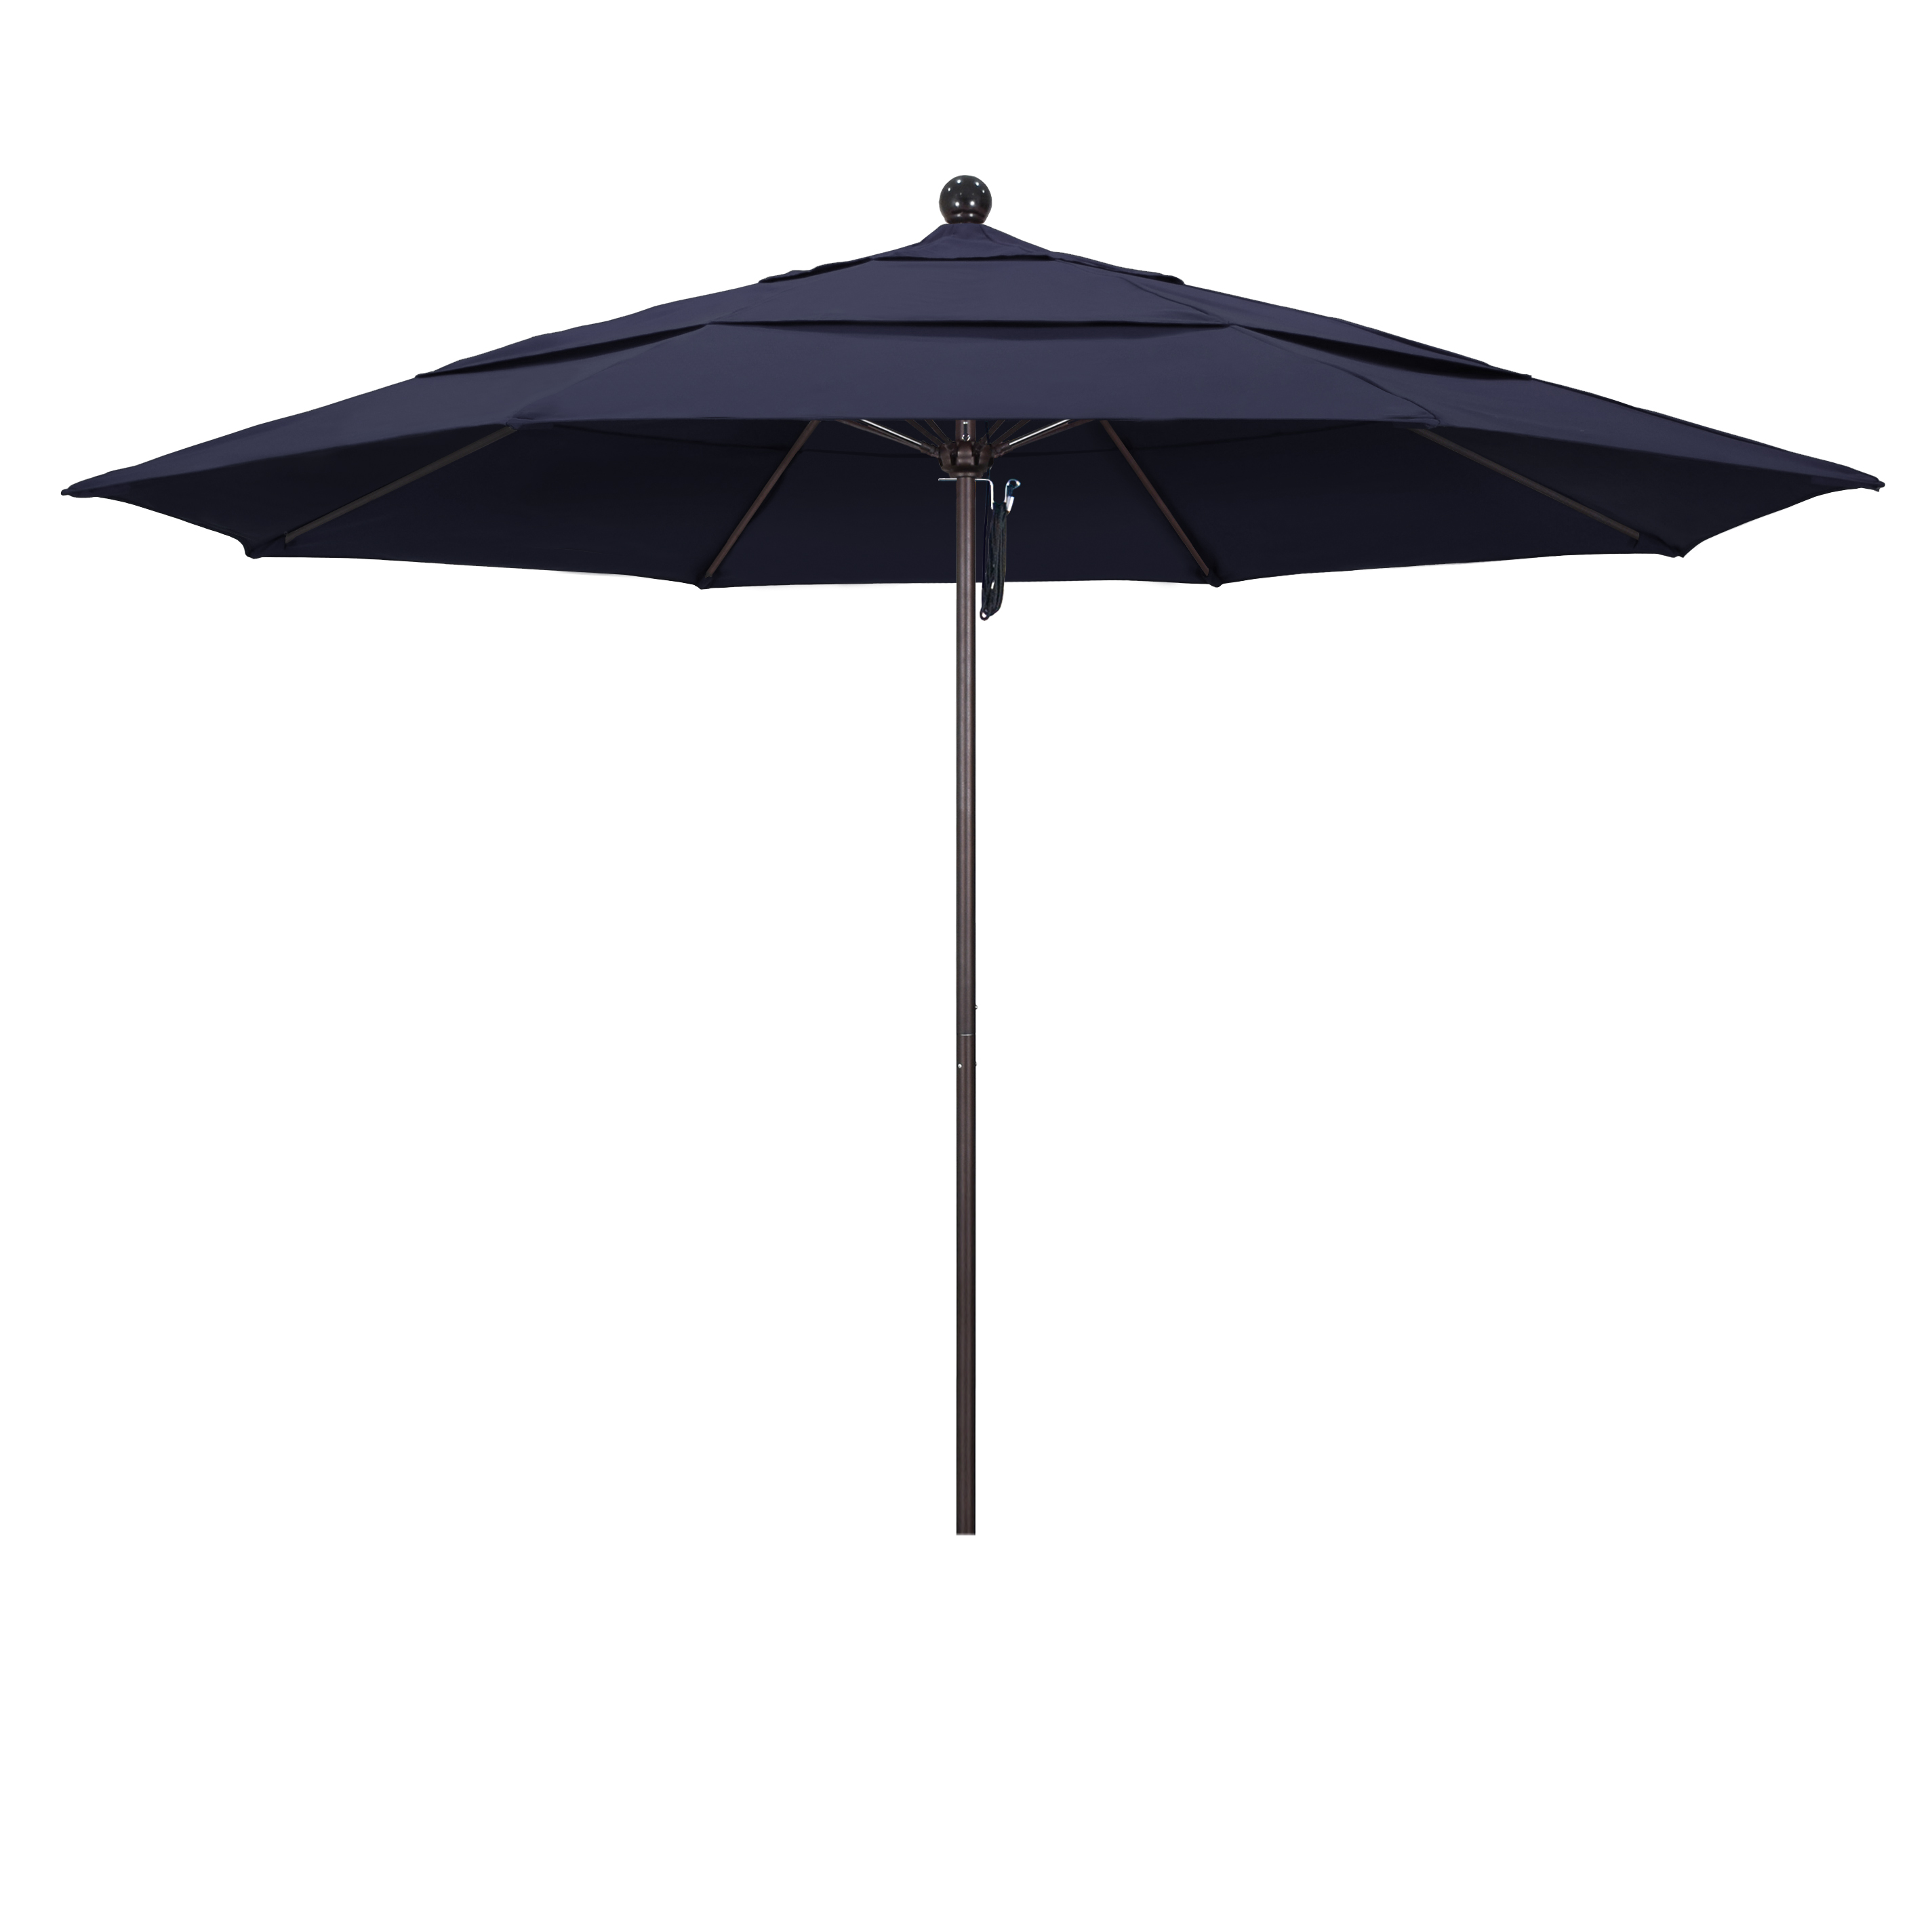 Picture of California Umbrella ALTO118117-5439-DWV 11 ft. Fiberglass Pulley Open Double Vents Market Umbrella - Bronze and Sunbrella-Navy